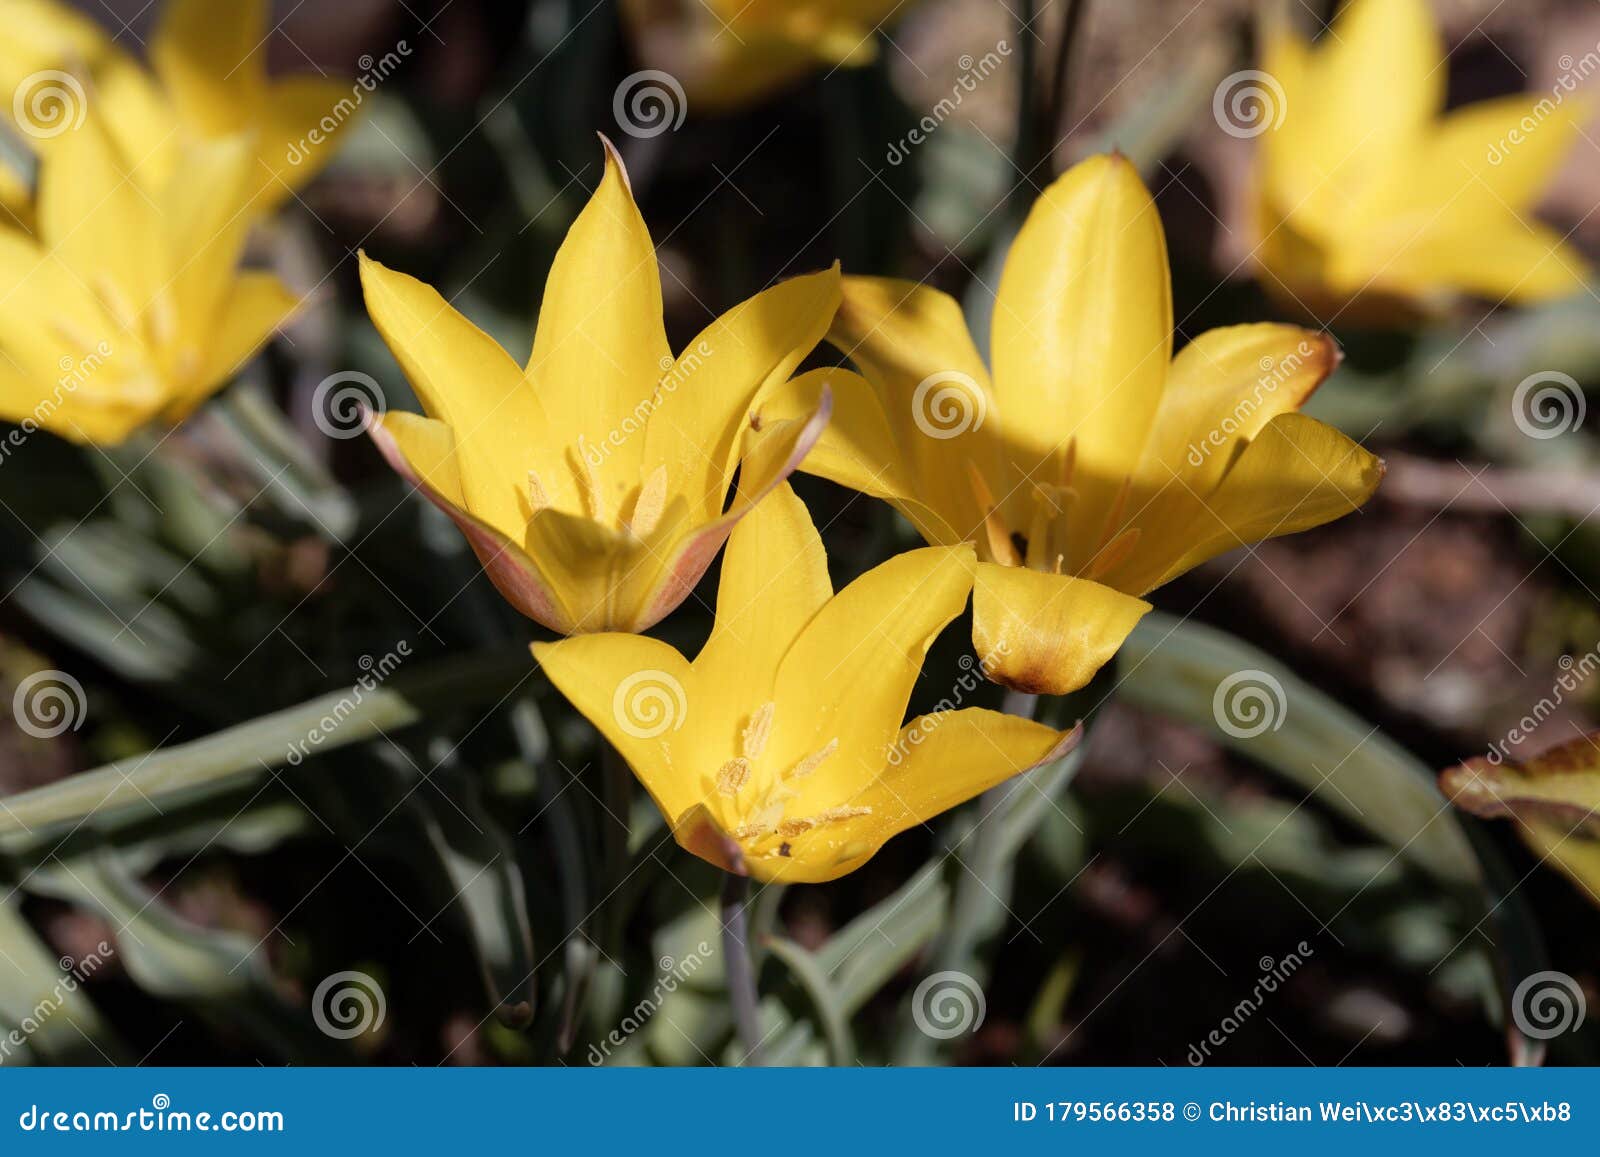 Flower Of The Tulip Tulipa Kolpakowskiana Stock Photo Image Of Botany Beauty 179566358